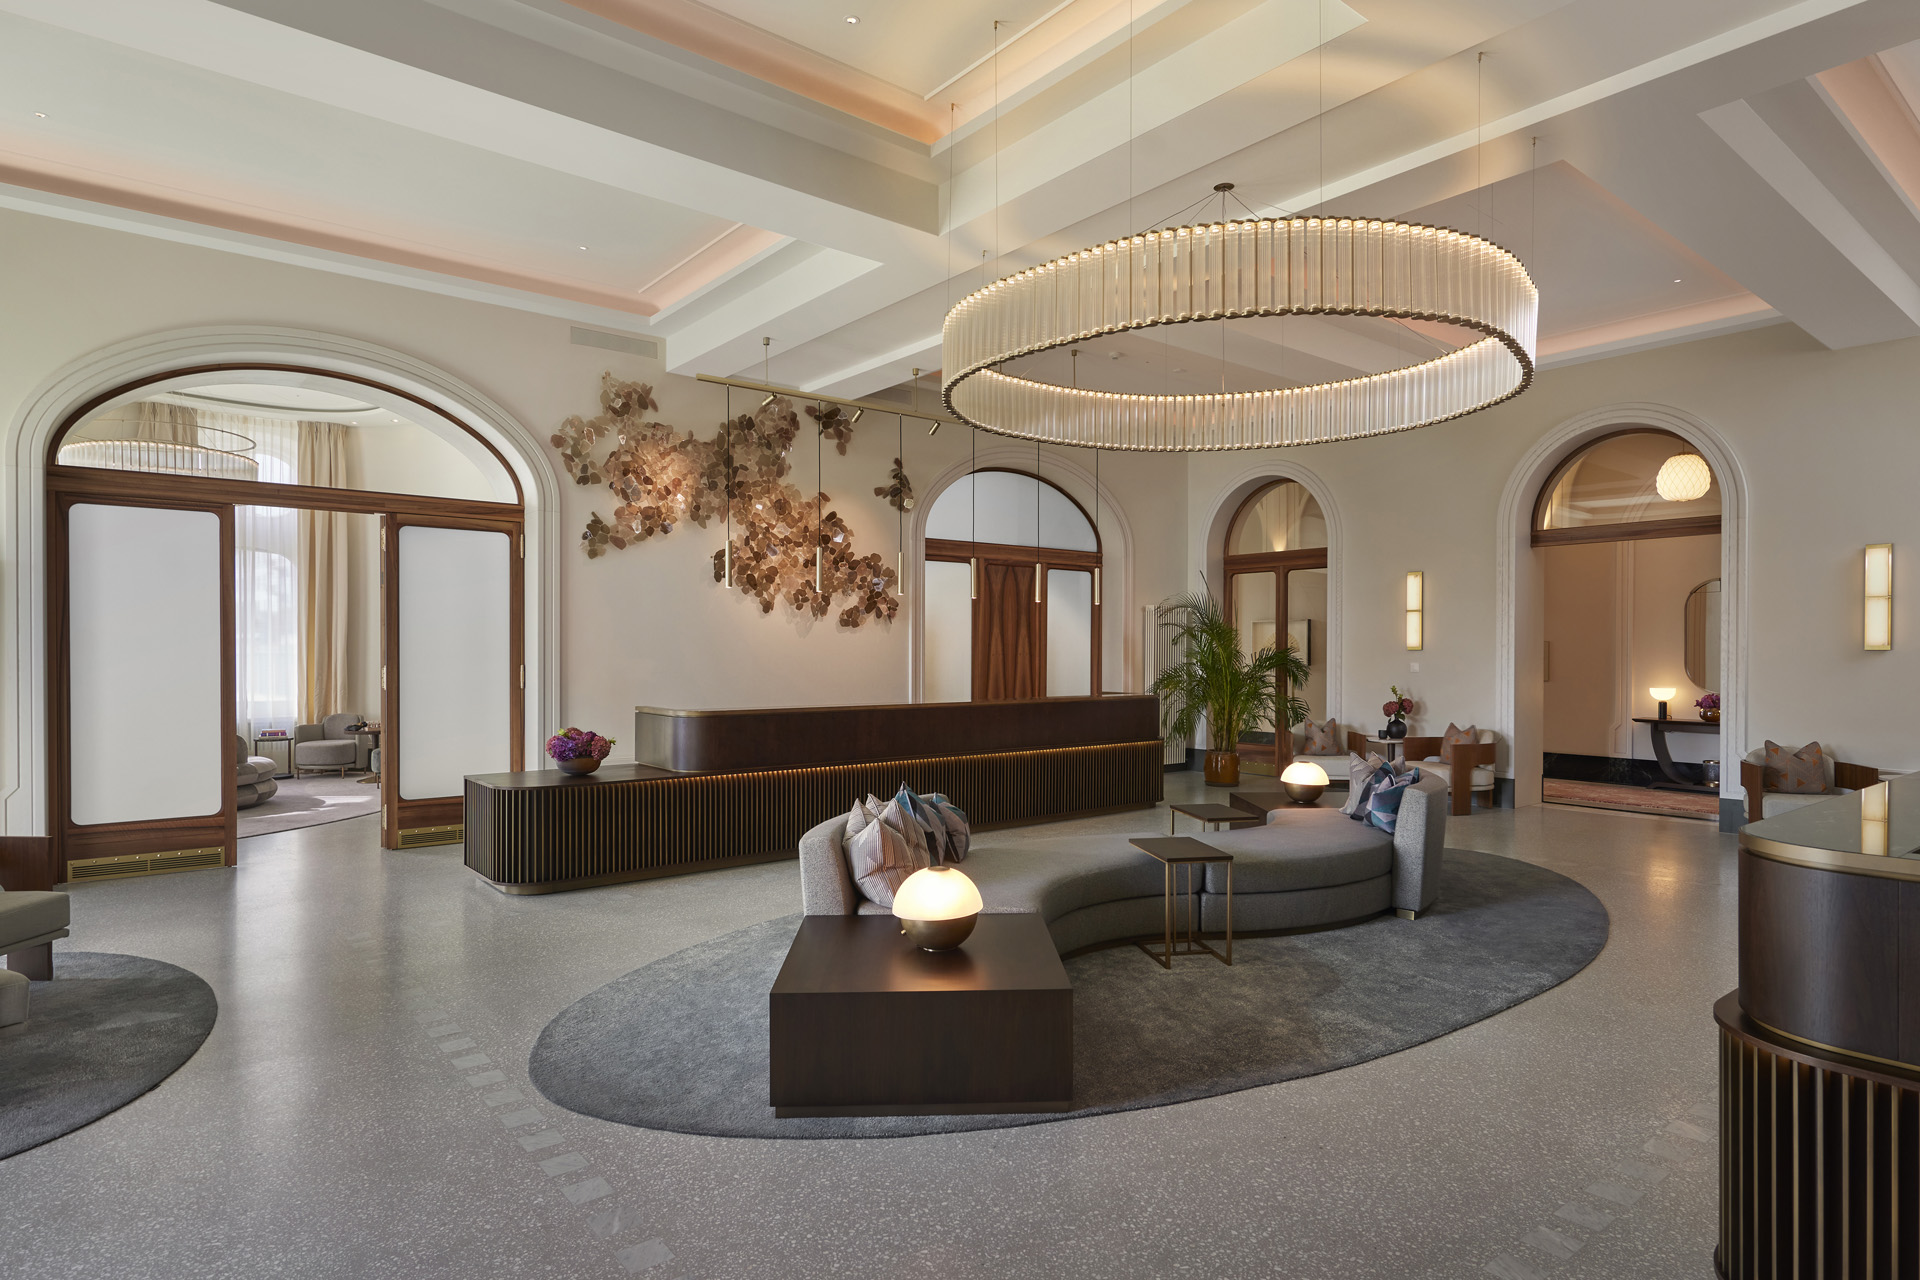 The lobby at the Mandarin Oriental Palace Luzern